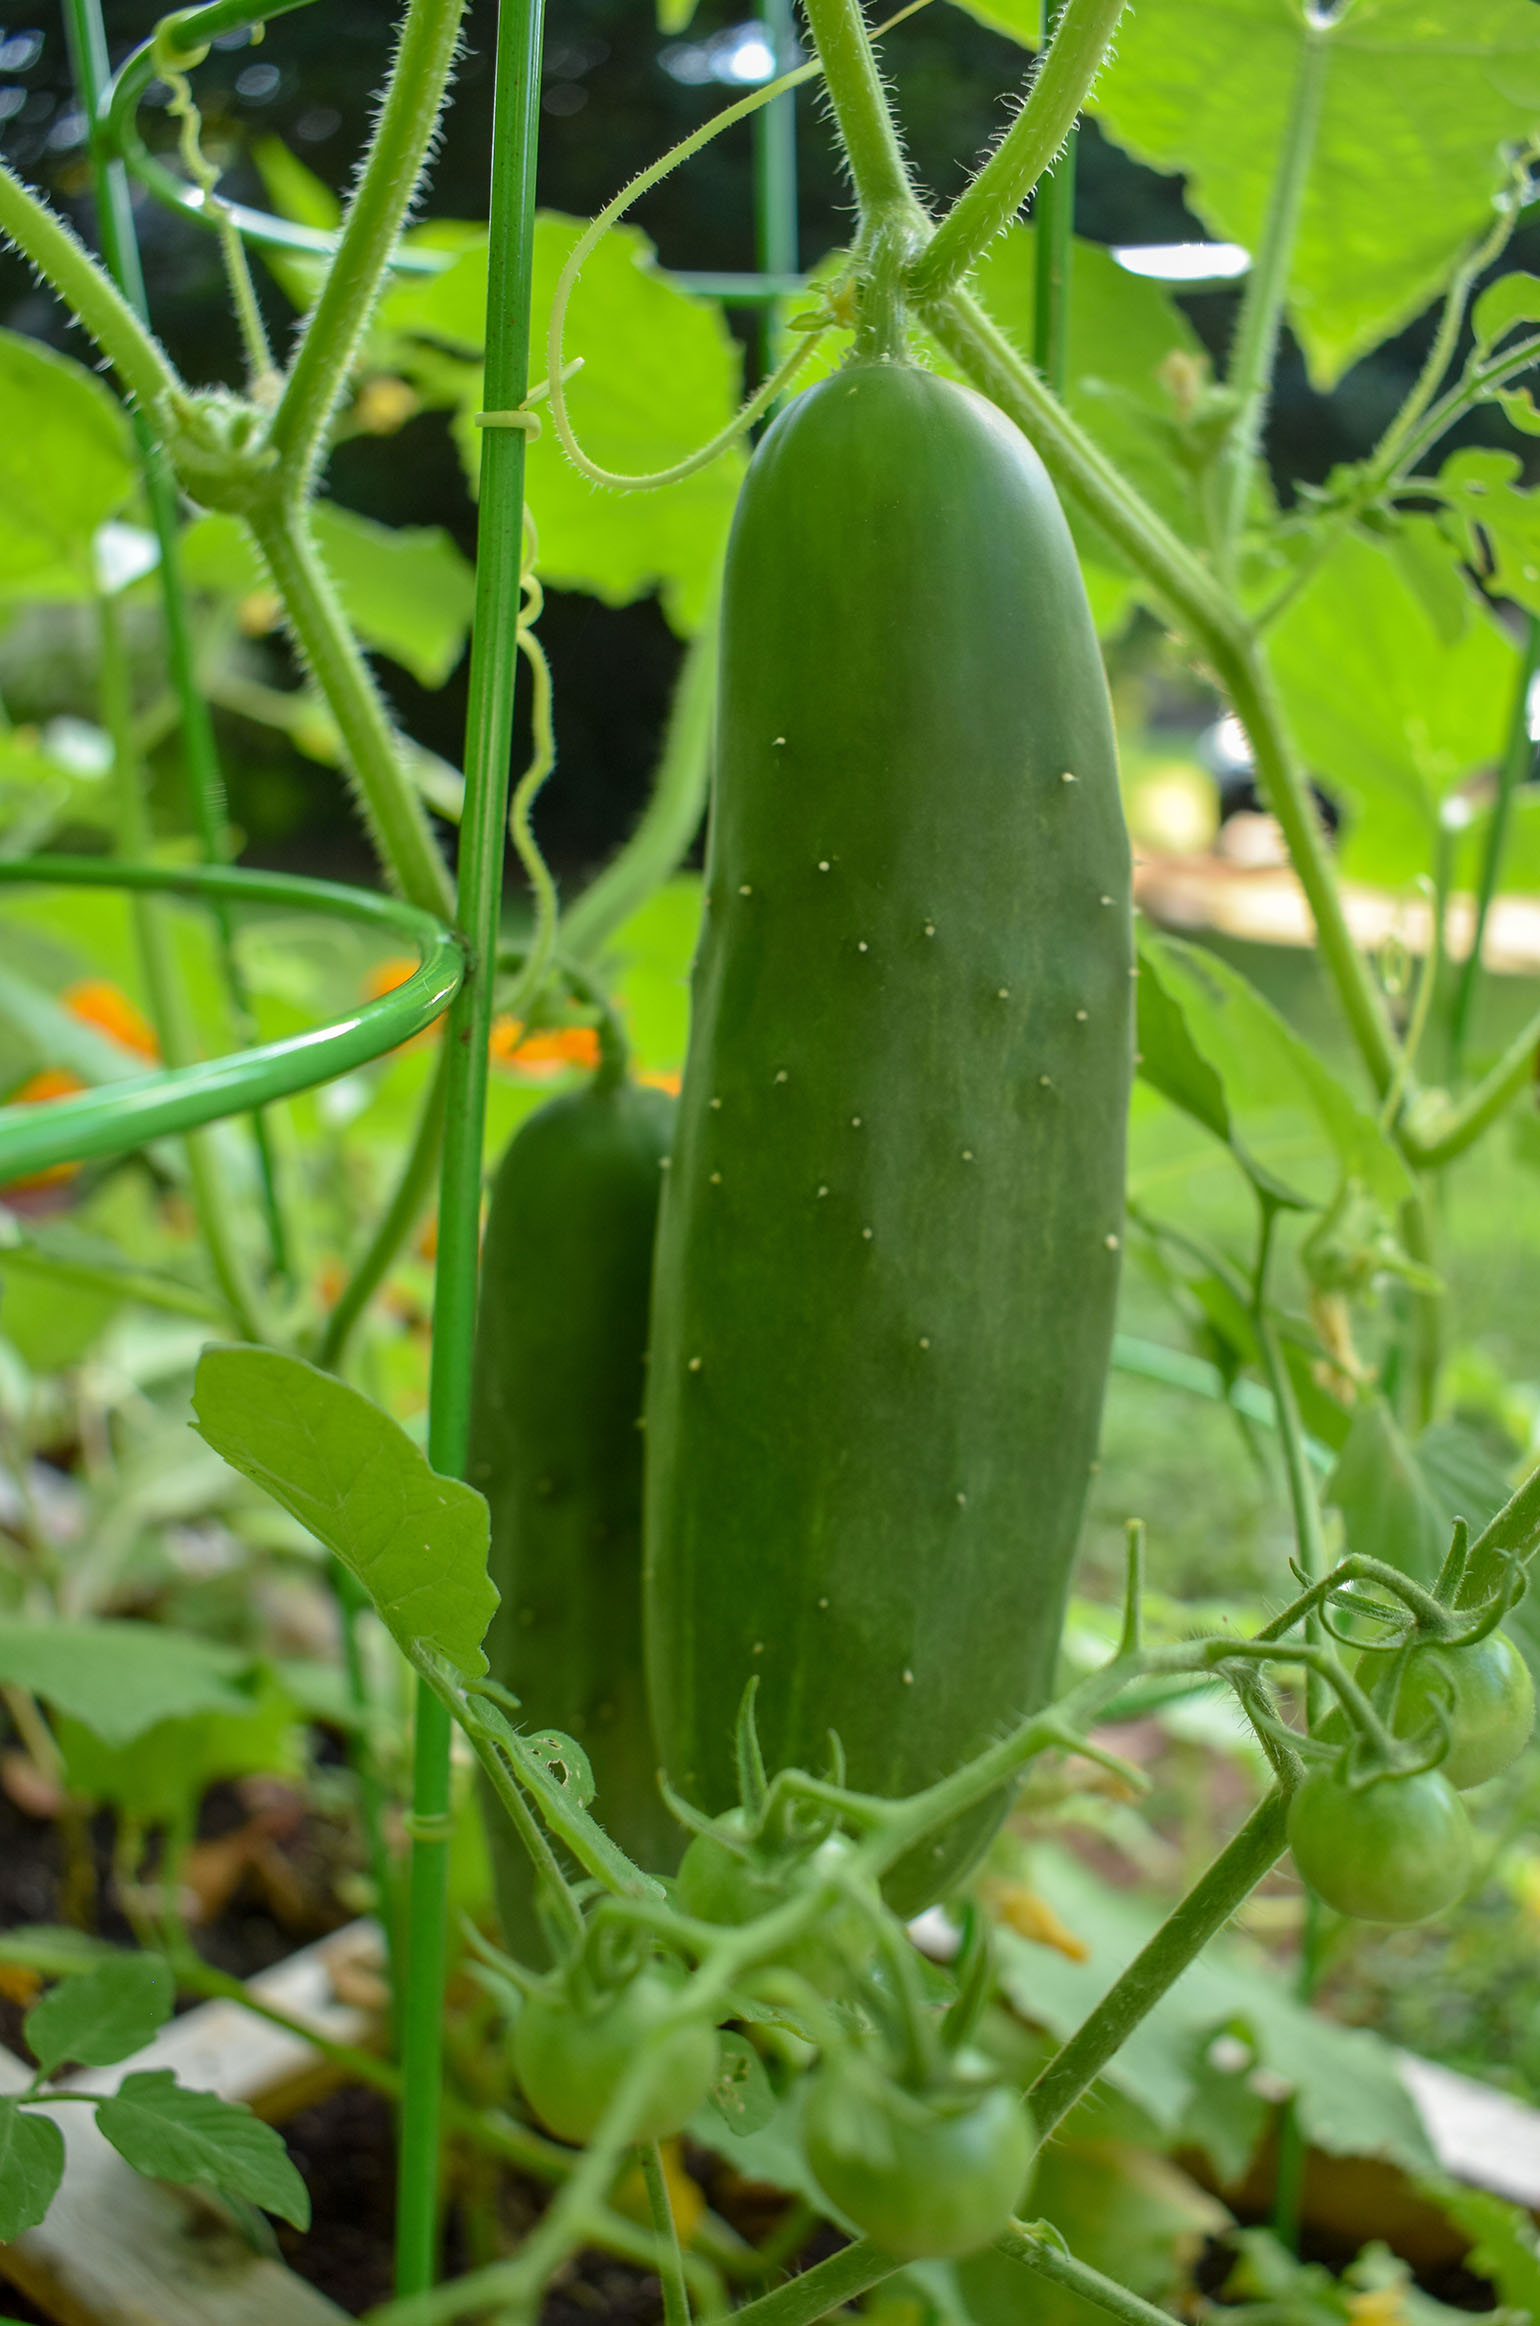 Growing Cucumbers in The Amateur Garden